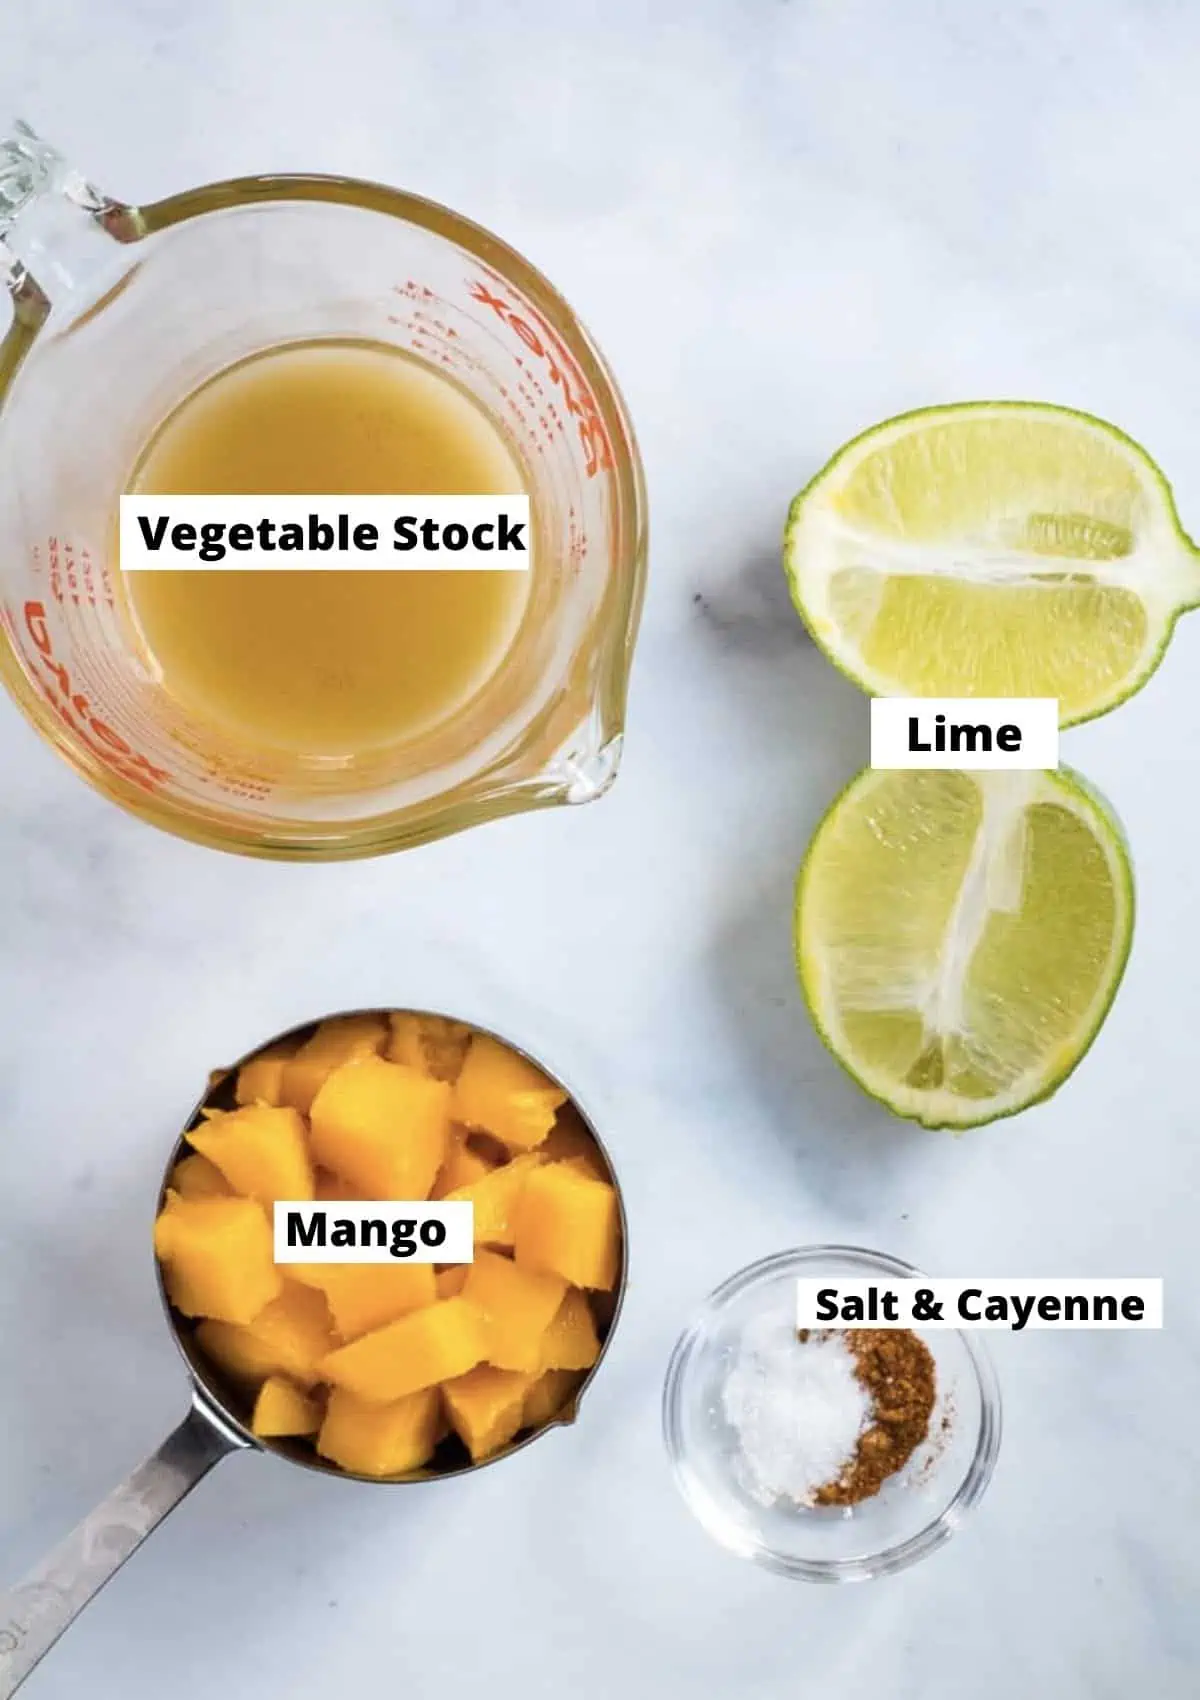 Mango Dressing Ingredients: vegetable stock, lime, mango chunks, salt, and cayenne.